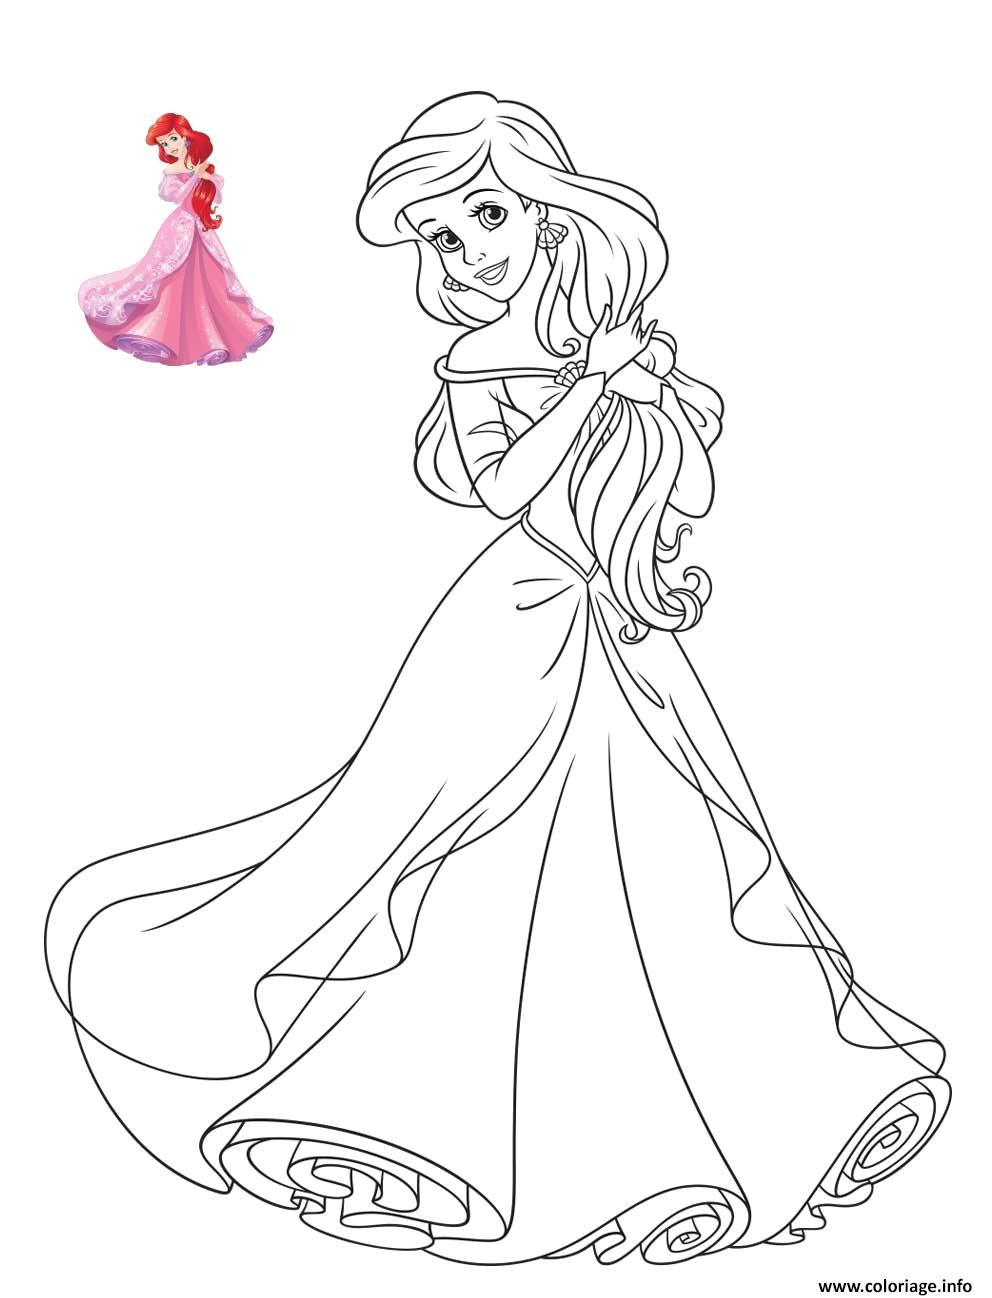 Coloriage A Imprimer Gratuit Disney Princesse Coloriage avec Coloriage Gratuit À Imprimer Disney